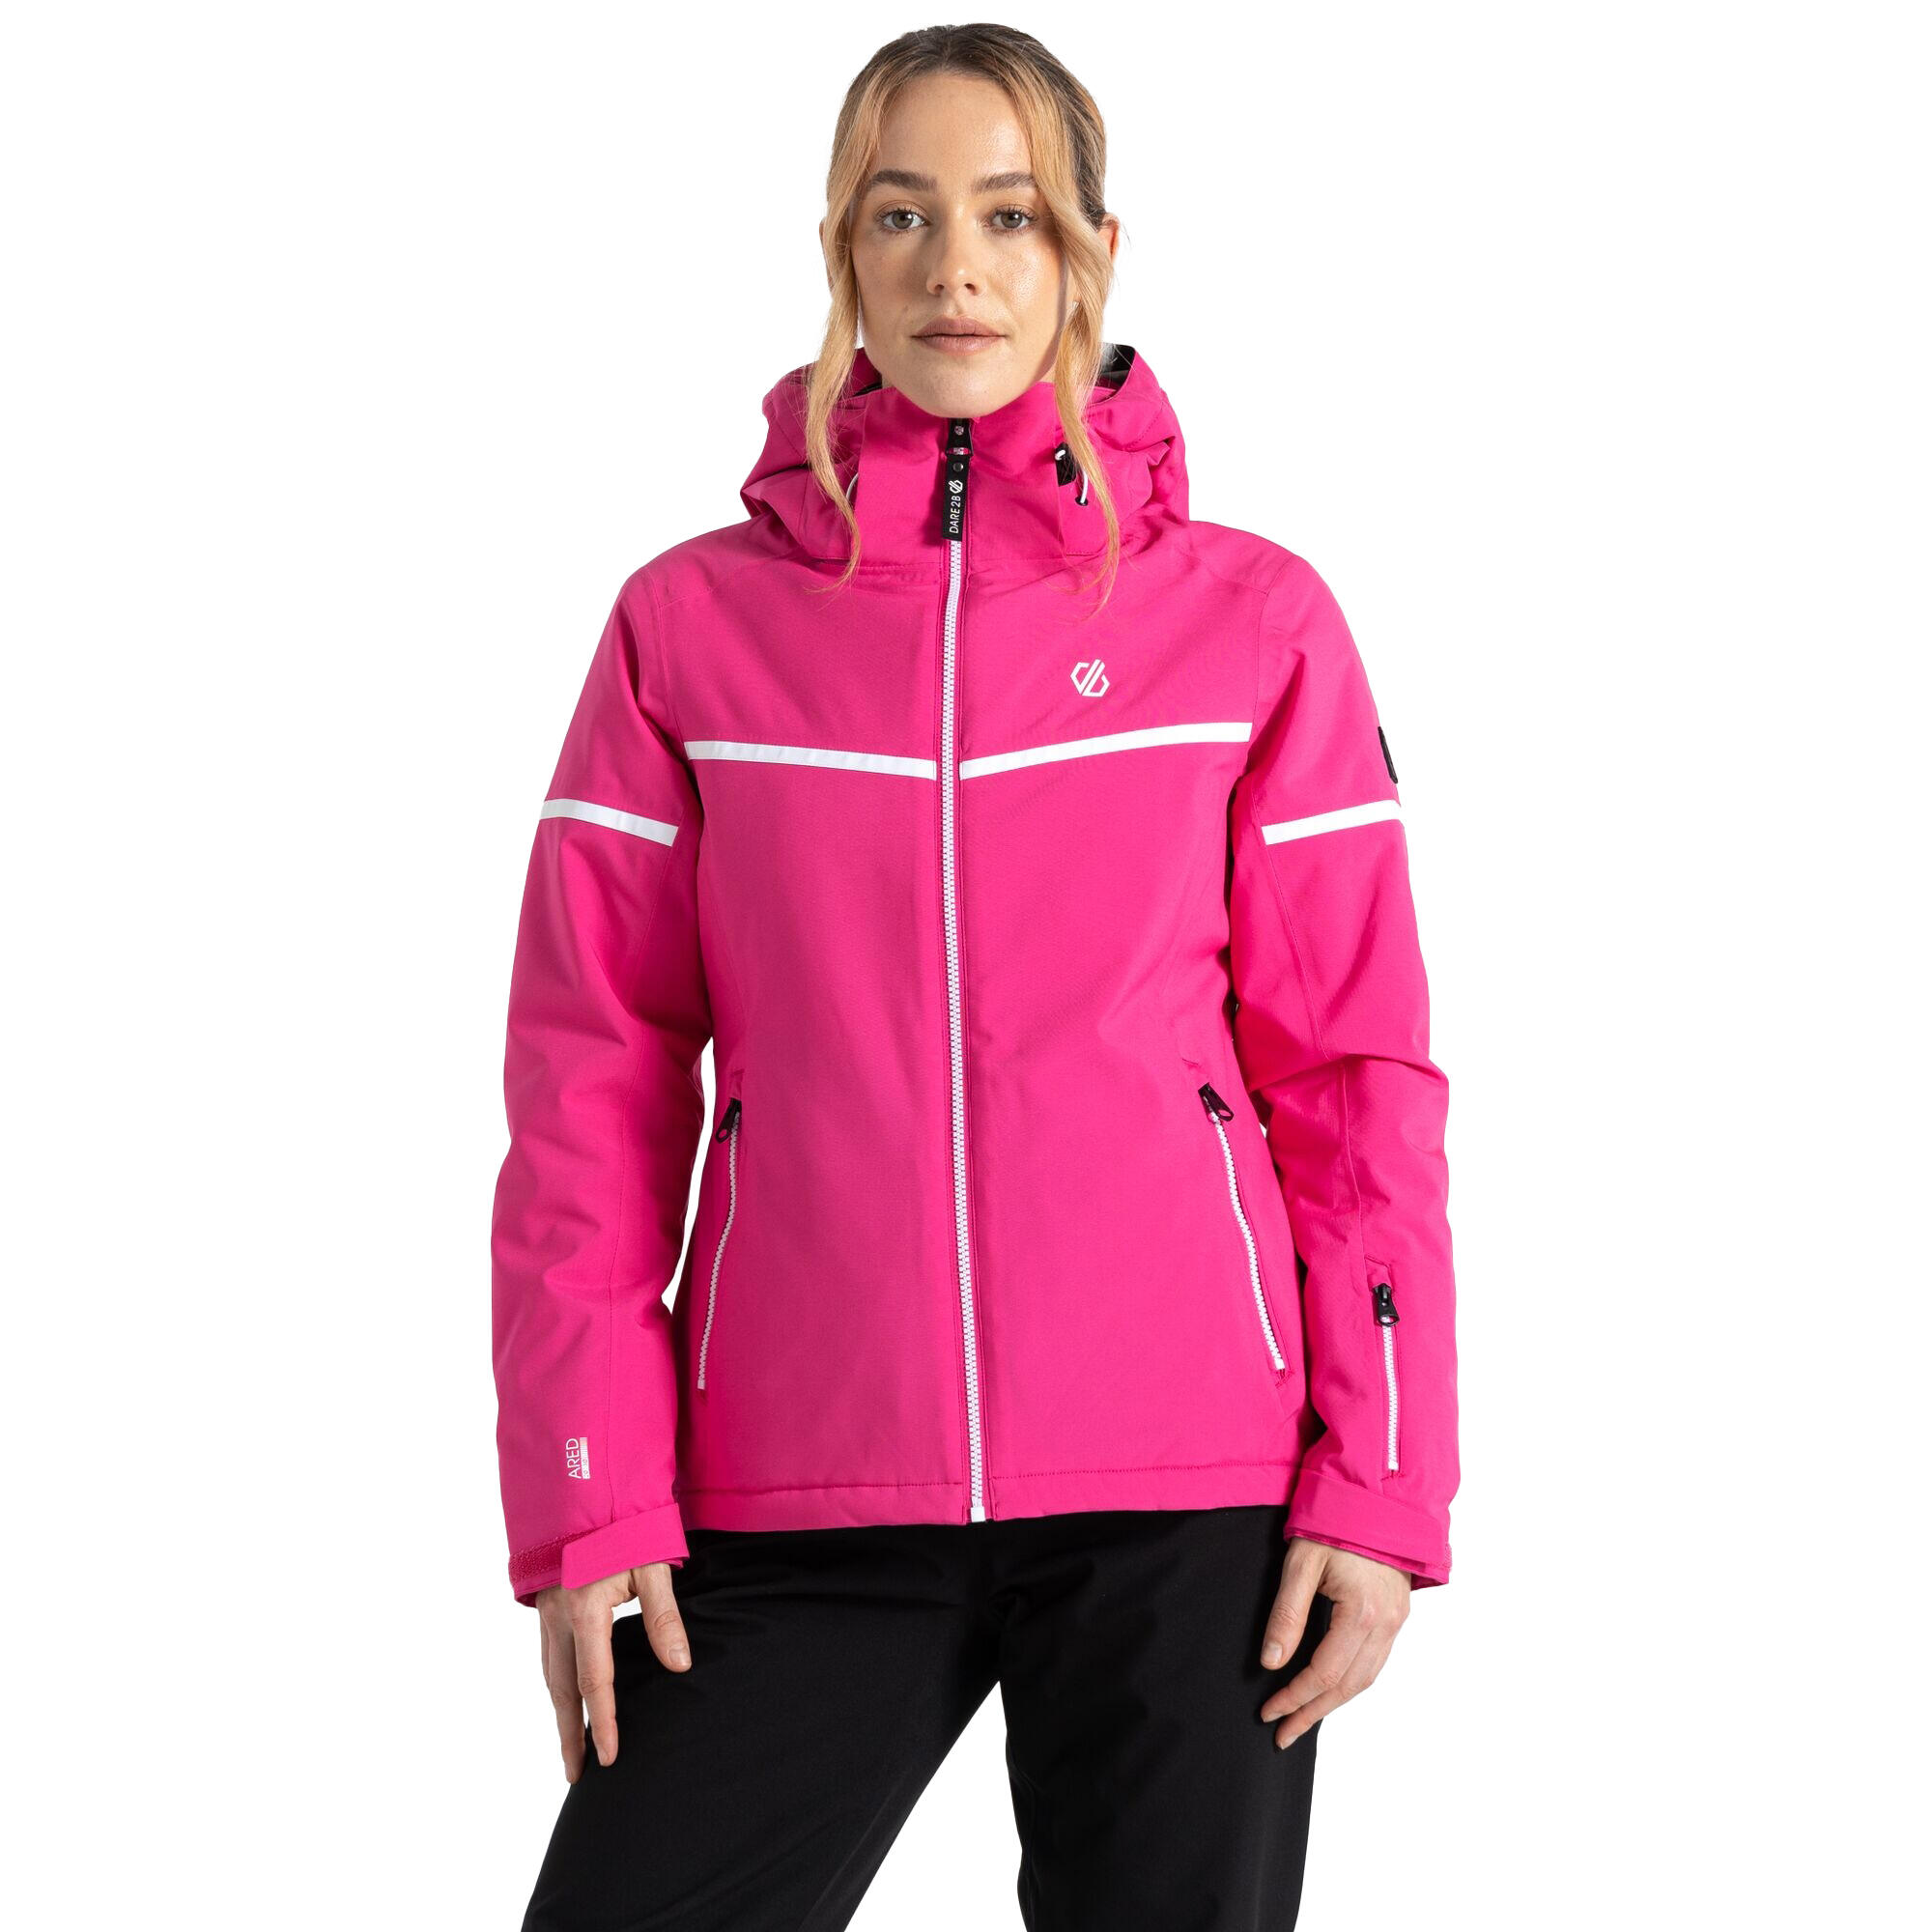 Womens/Ladies Carving Ski Jacket (Pure Pink) 4/5